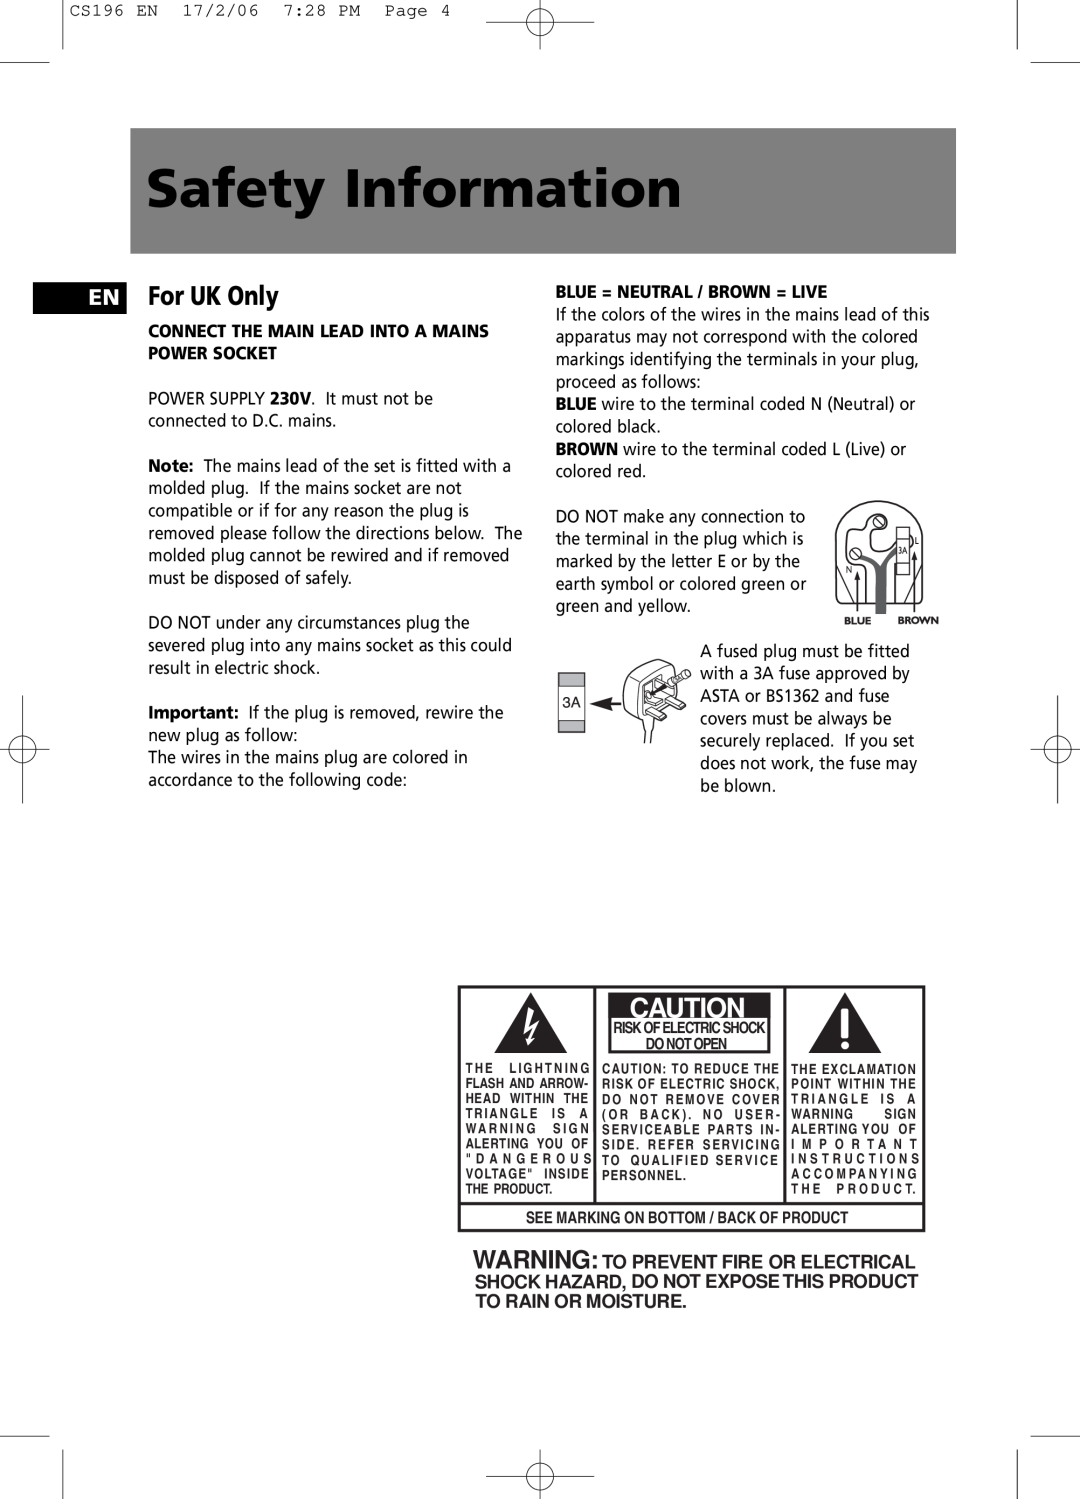 Technicolor - Thomson CS196 user manual Safety Information, EN For UK Only 